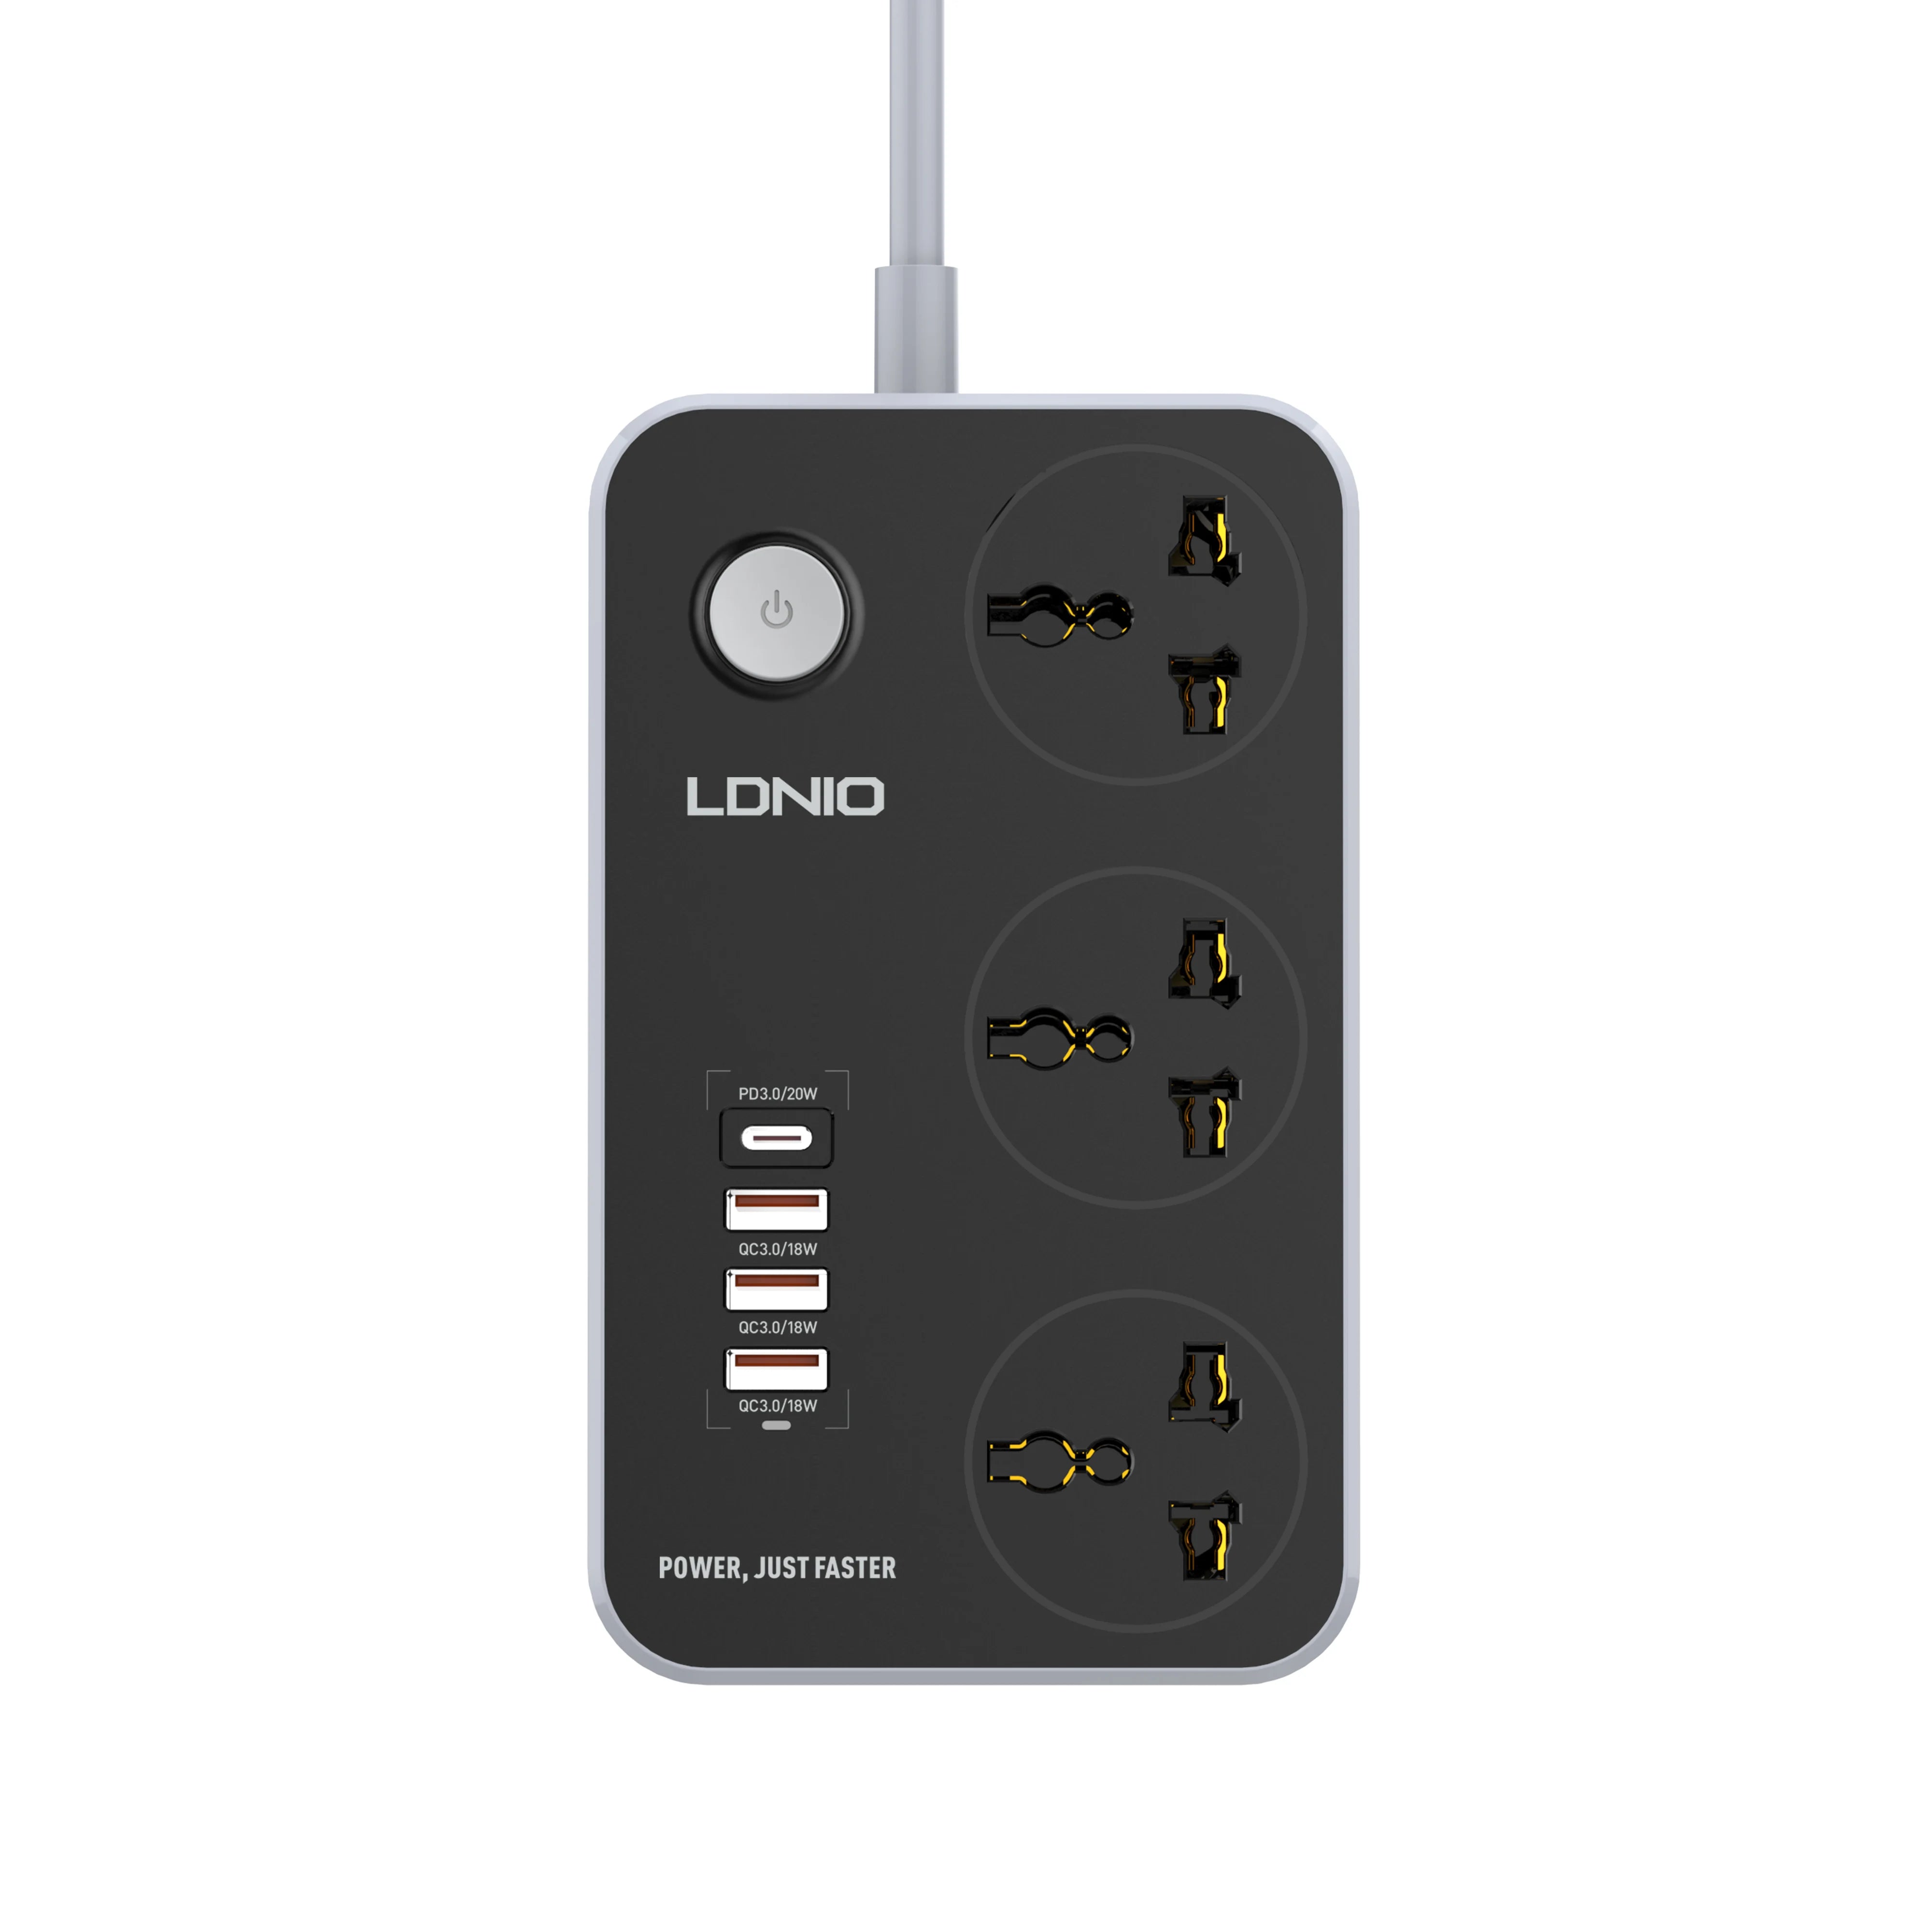 LDNIO Fast Charging Power Extension With 20W USB C PD Port & 3 QC 3.0 Ports EU Plug SC3412